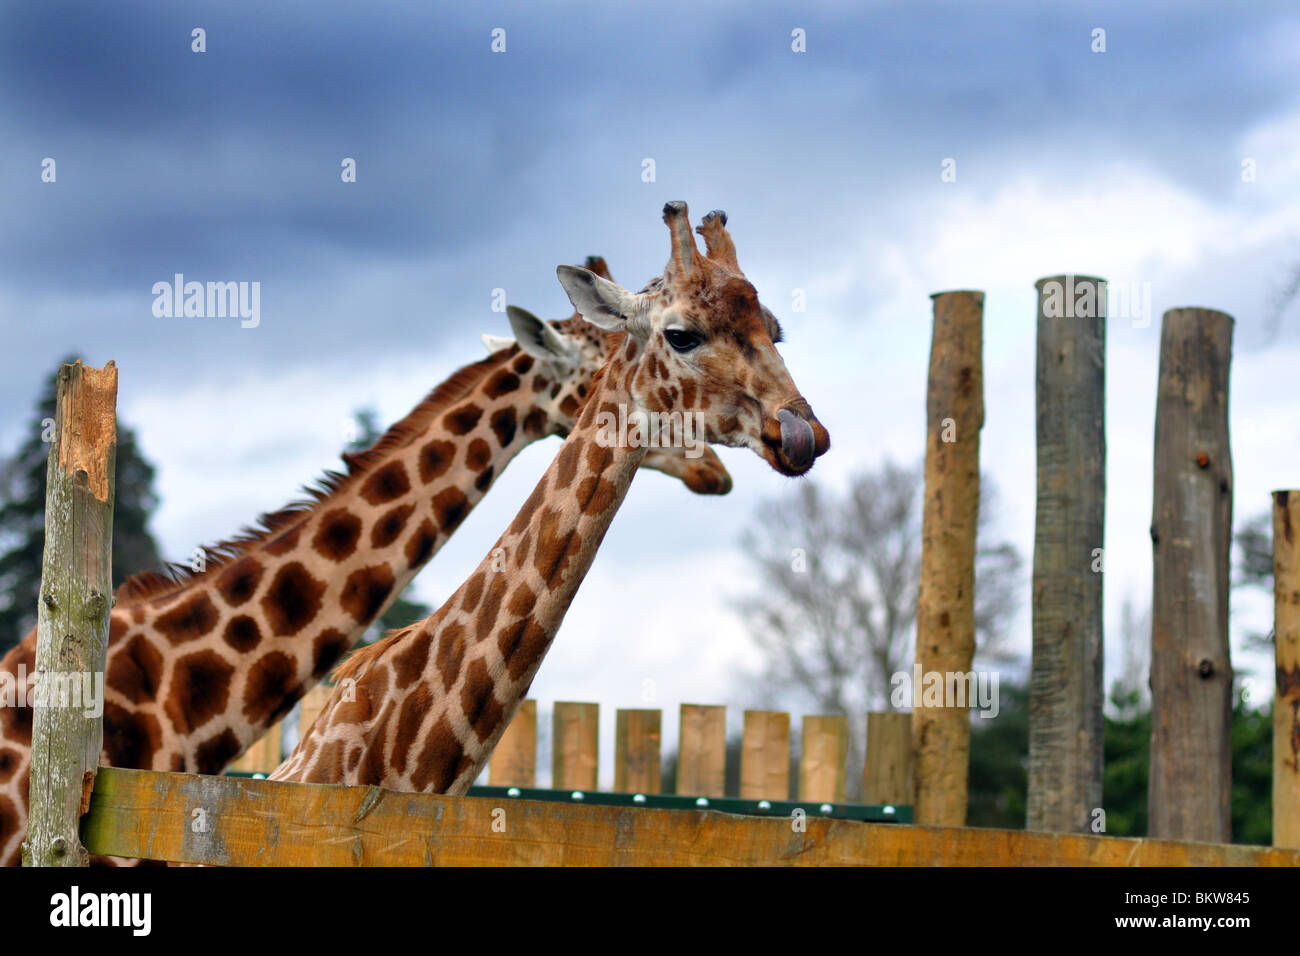 Two giraffes in a zoo, Scotland, UK Stock Photo